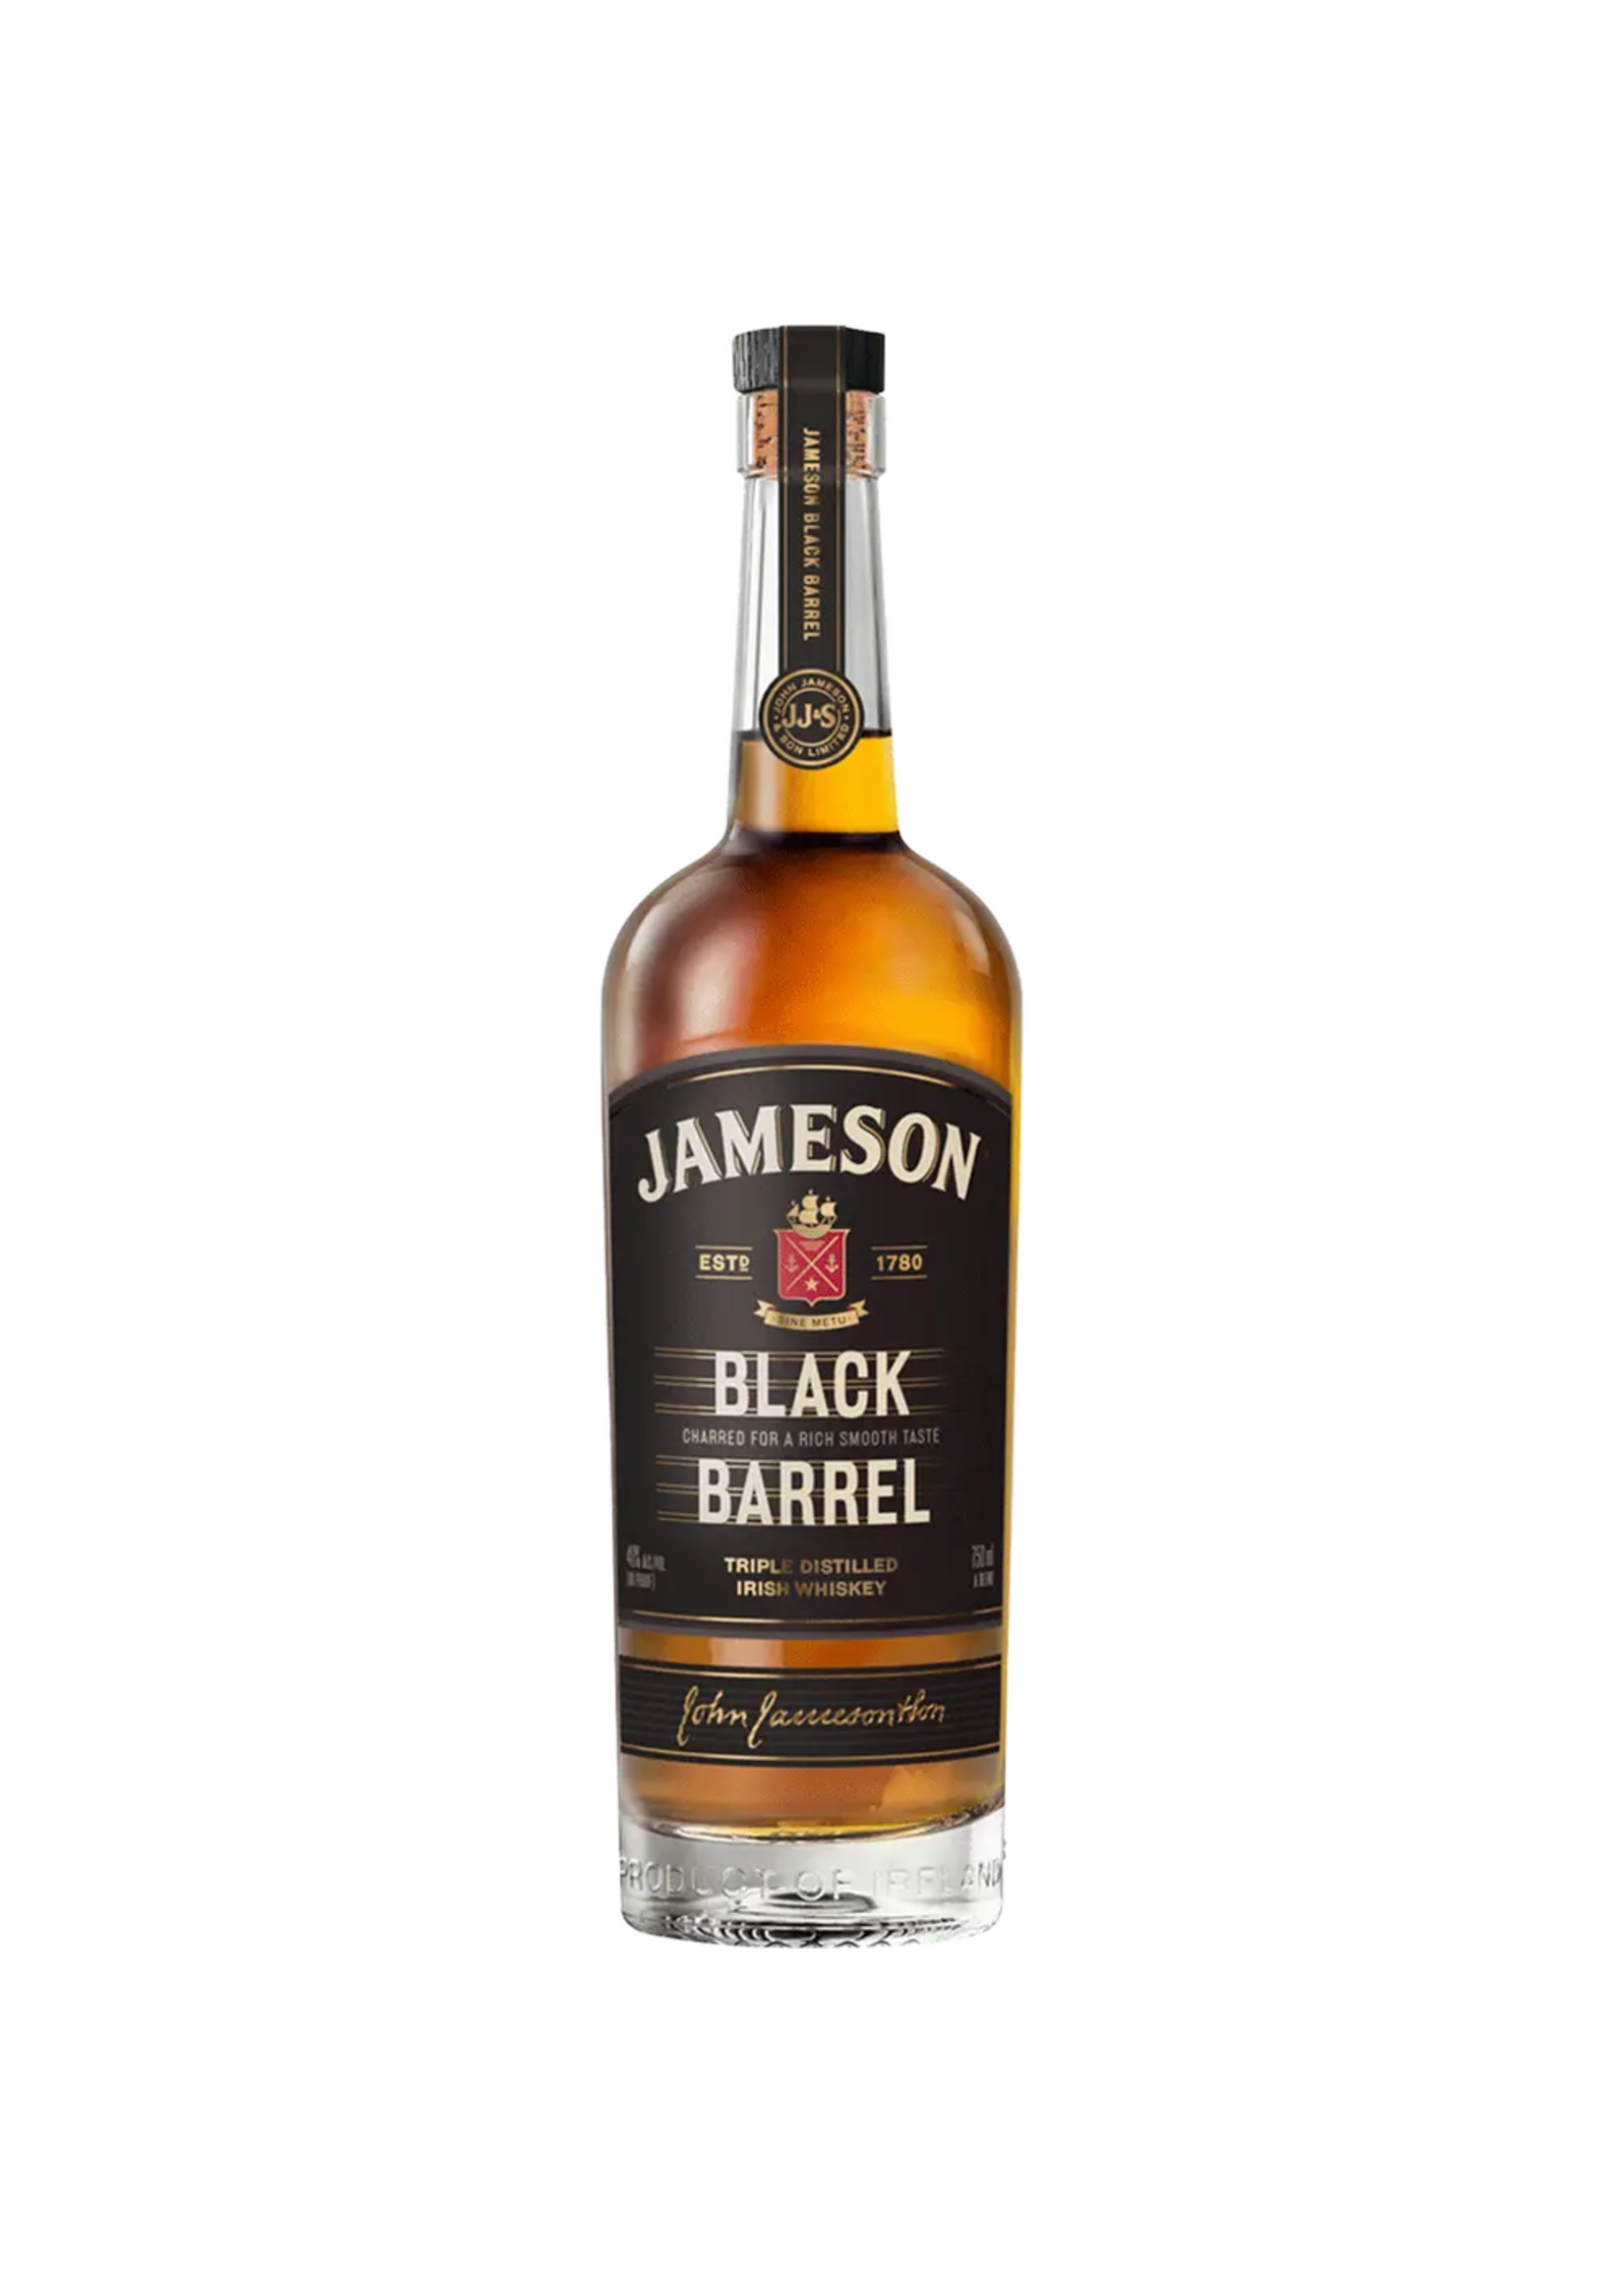 Jameson Black Barrel 80Proof 750ml